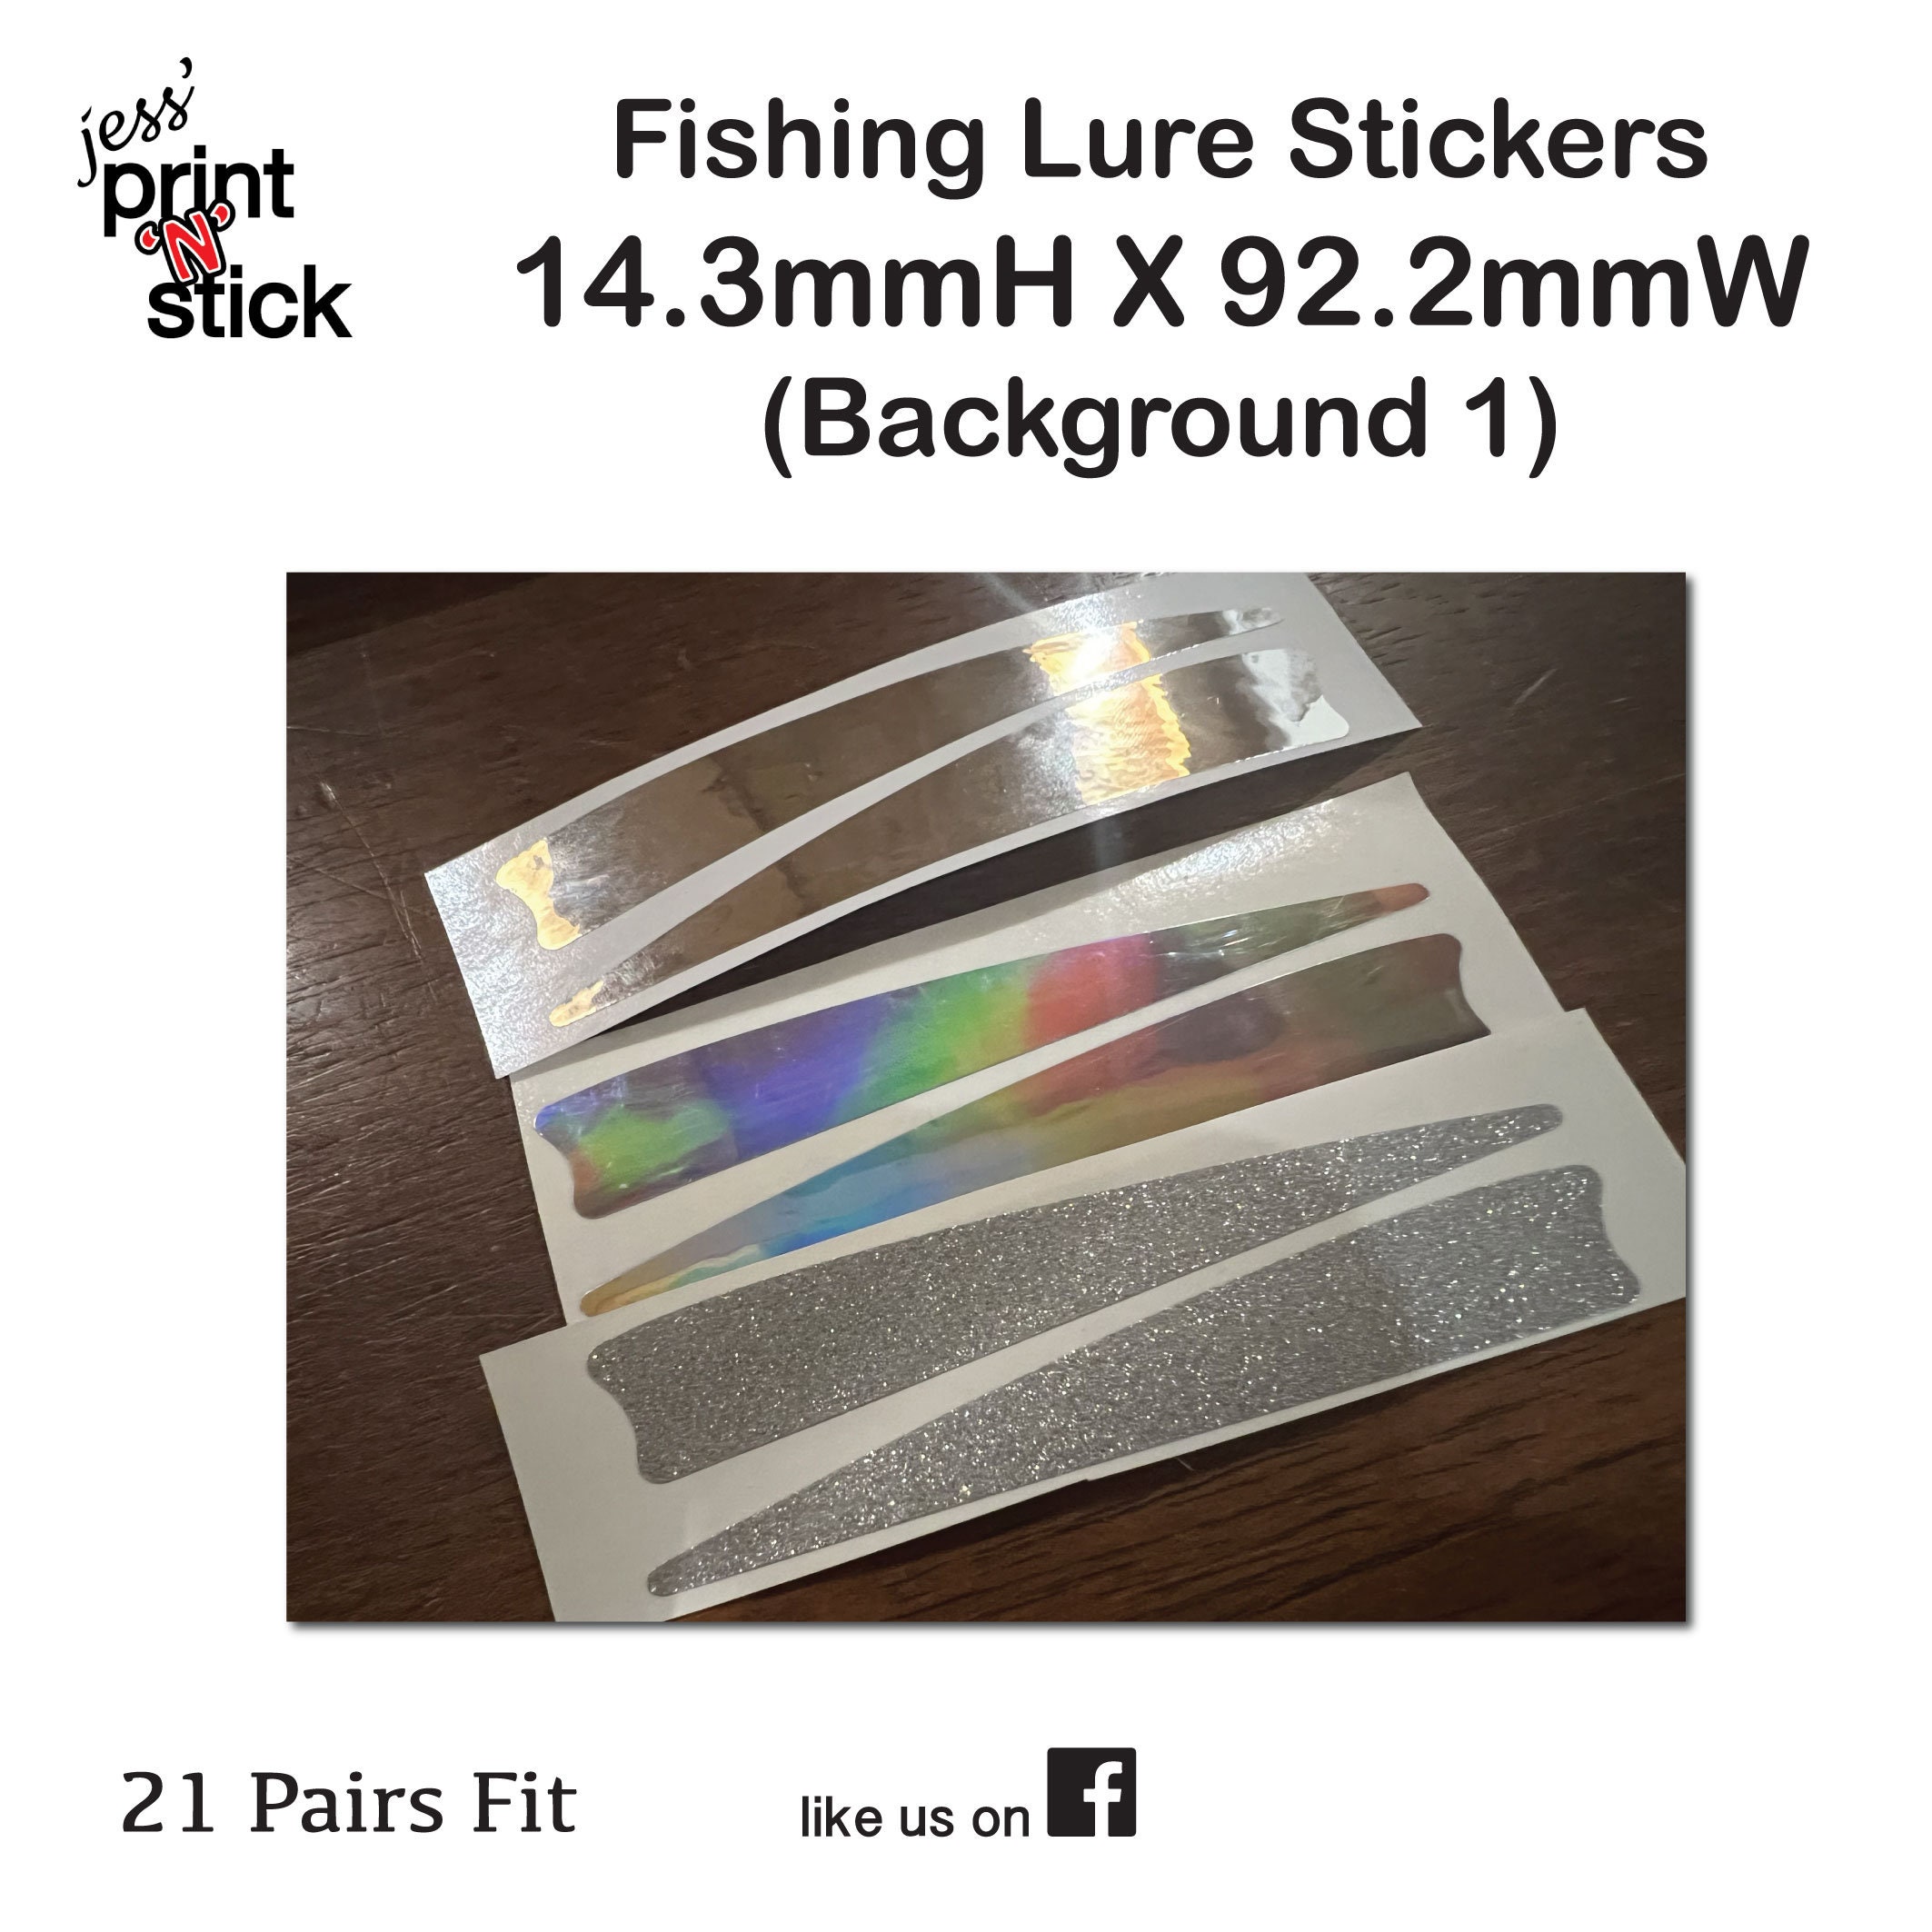 Fishing Lure Stickers 14.3mmh X 92.2mmw background-1 X1 A4 Sheet